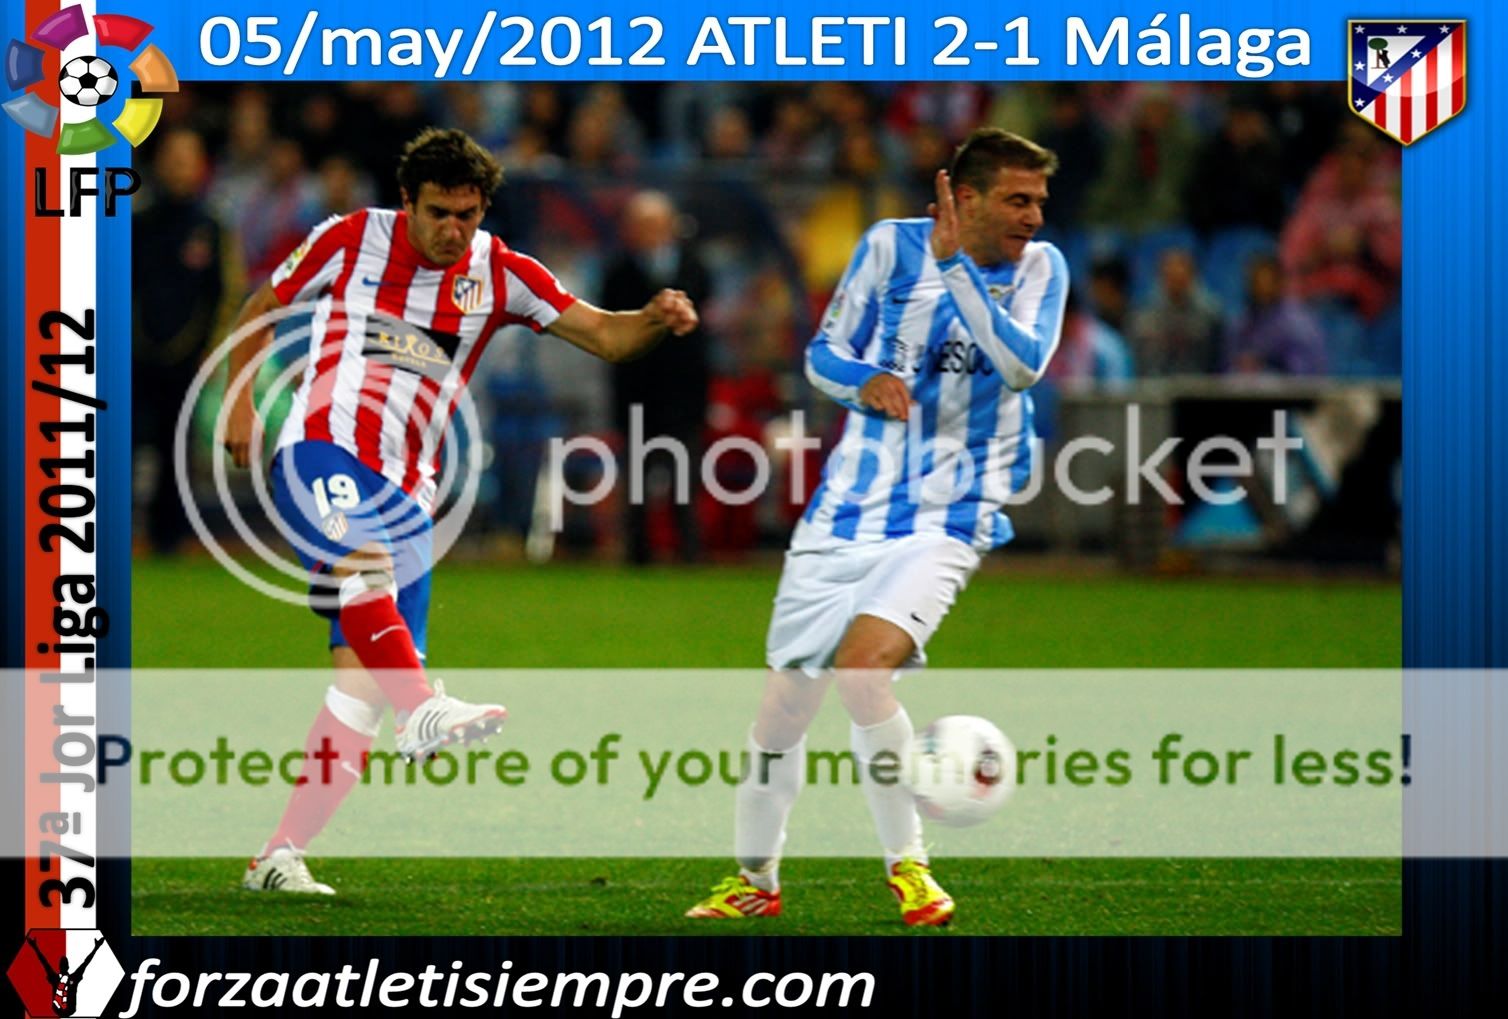 37ª Jor. Liga 2011/12 ATLETI 2-1 Malaga.- El Atlético recobra la figura 013Copiar-12